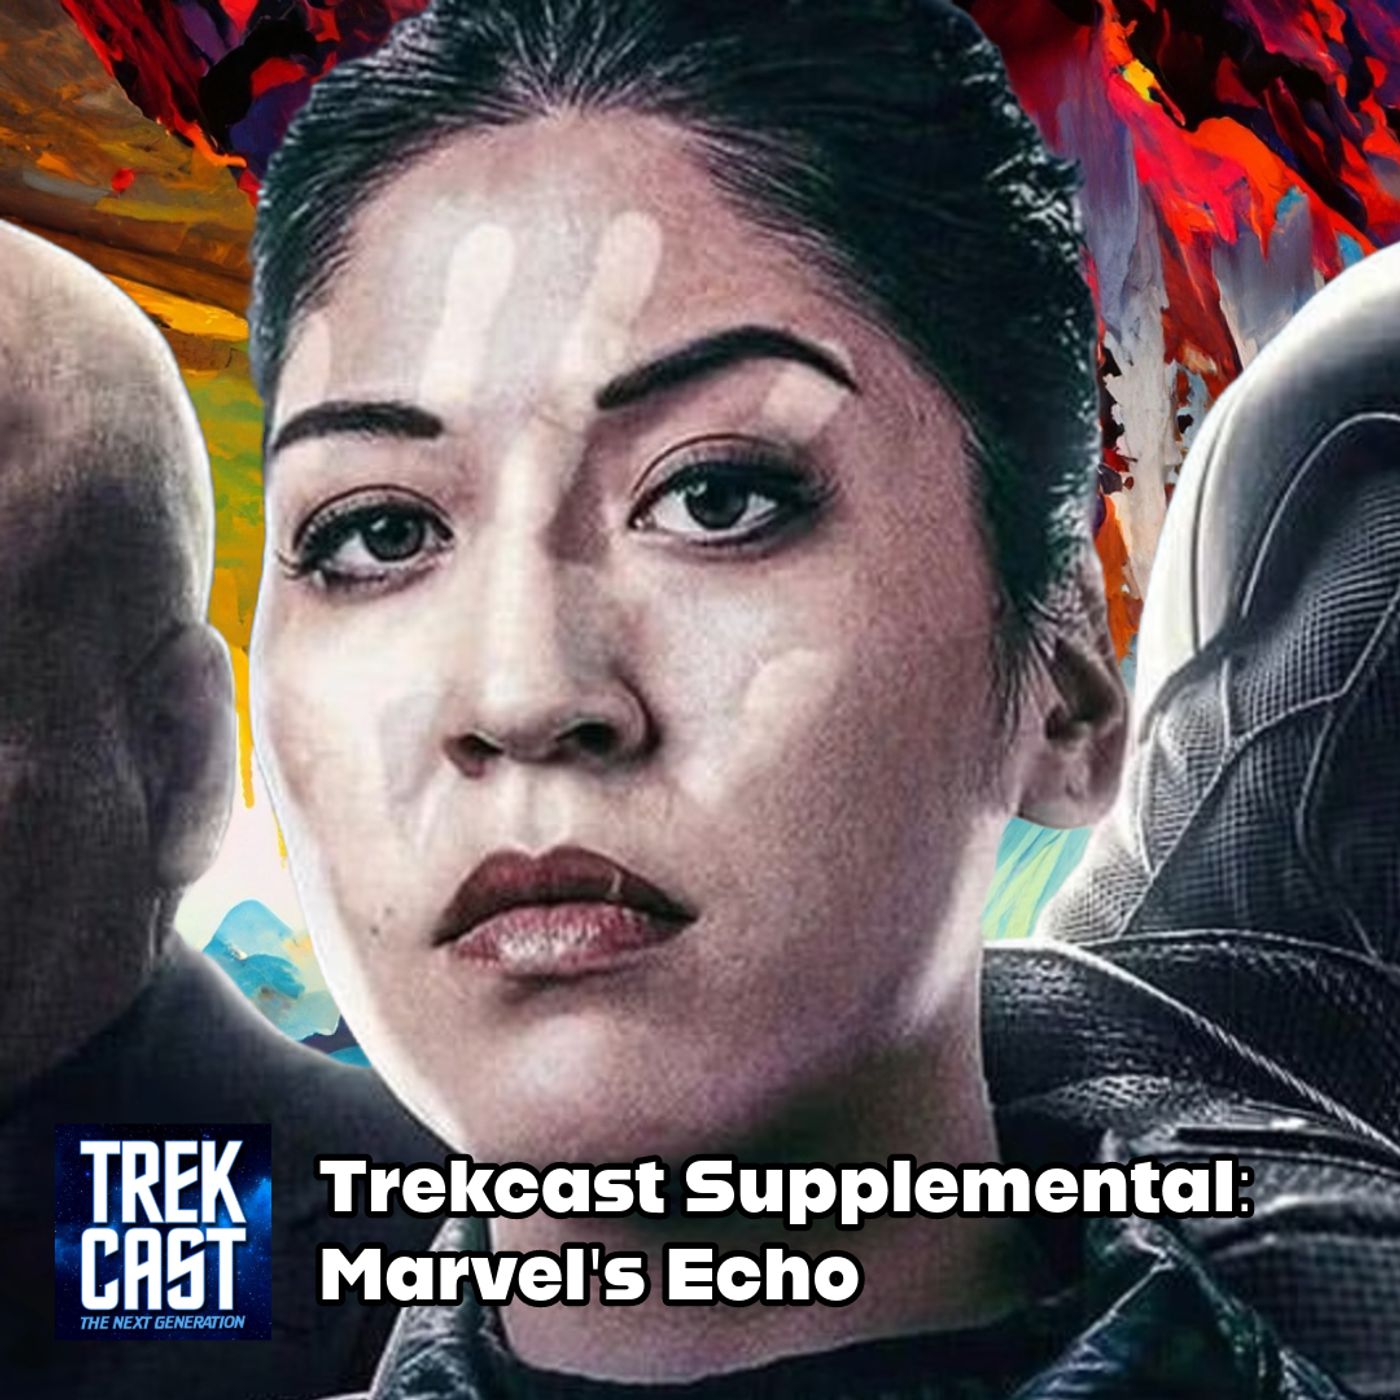 Trekcast Supplemental: Marvel's Echo, was it good?